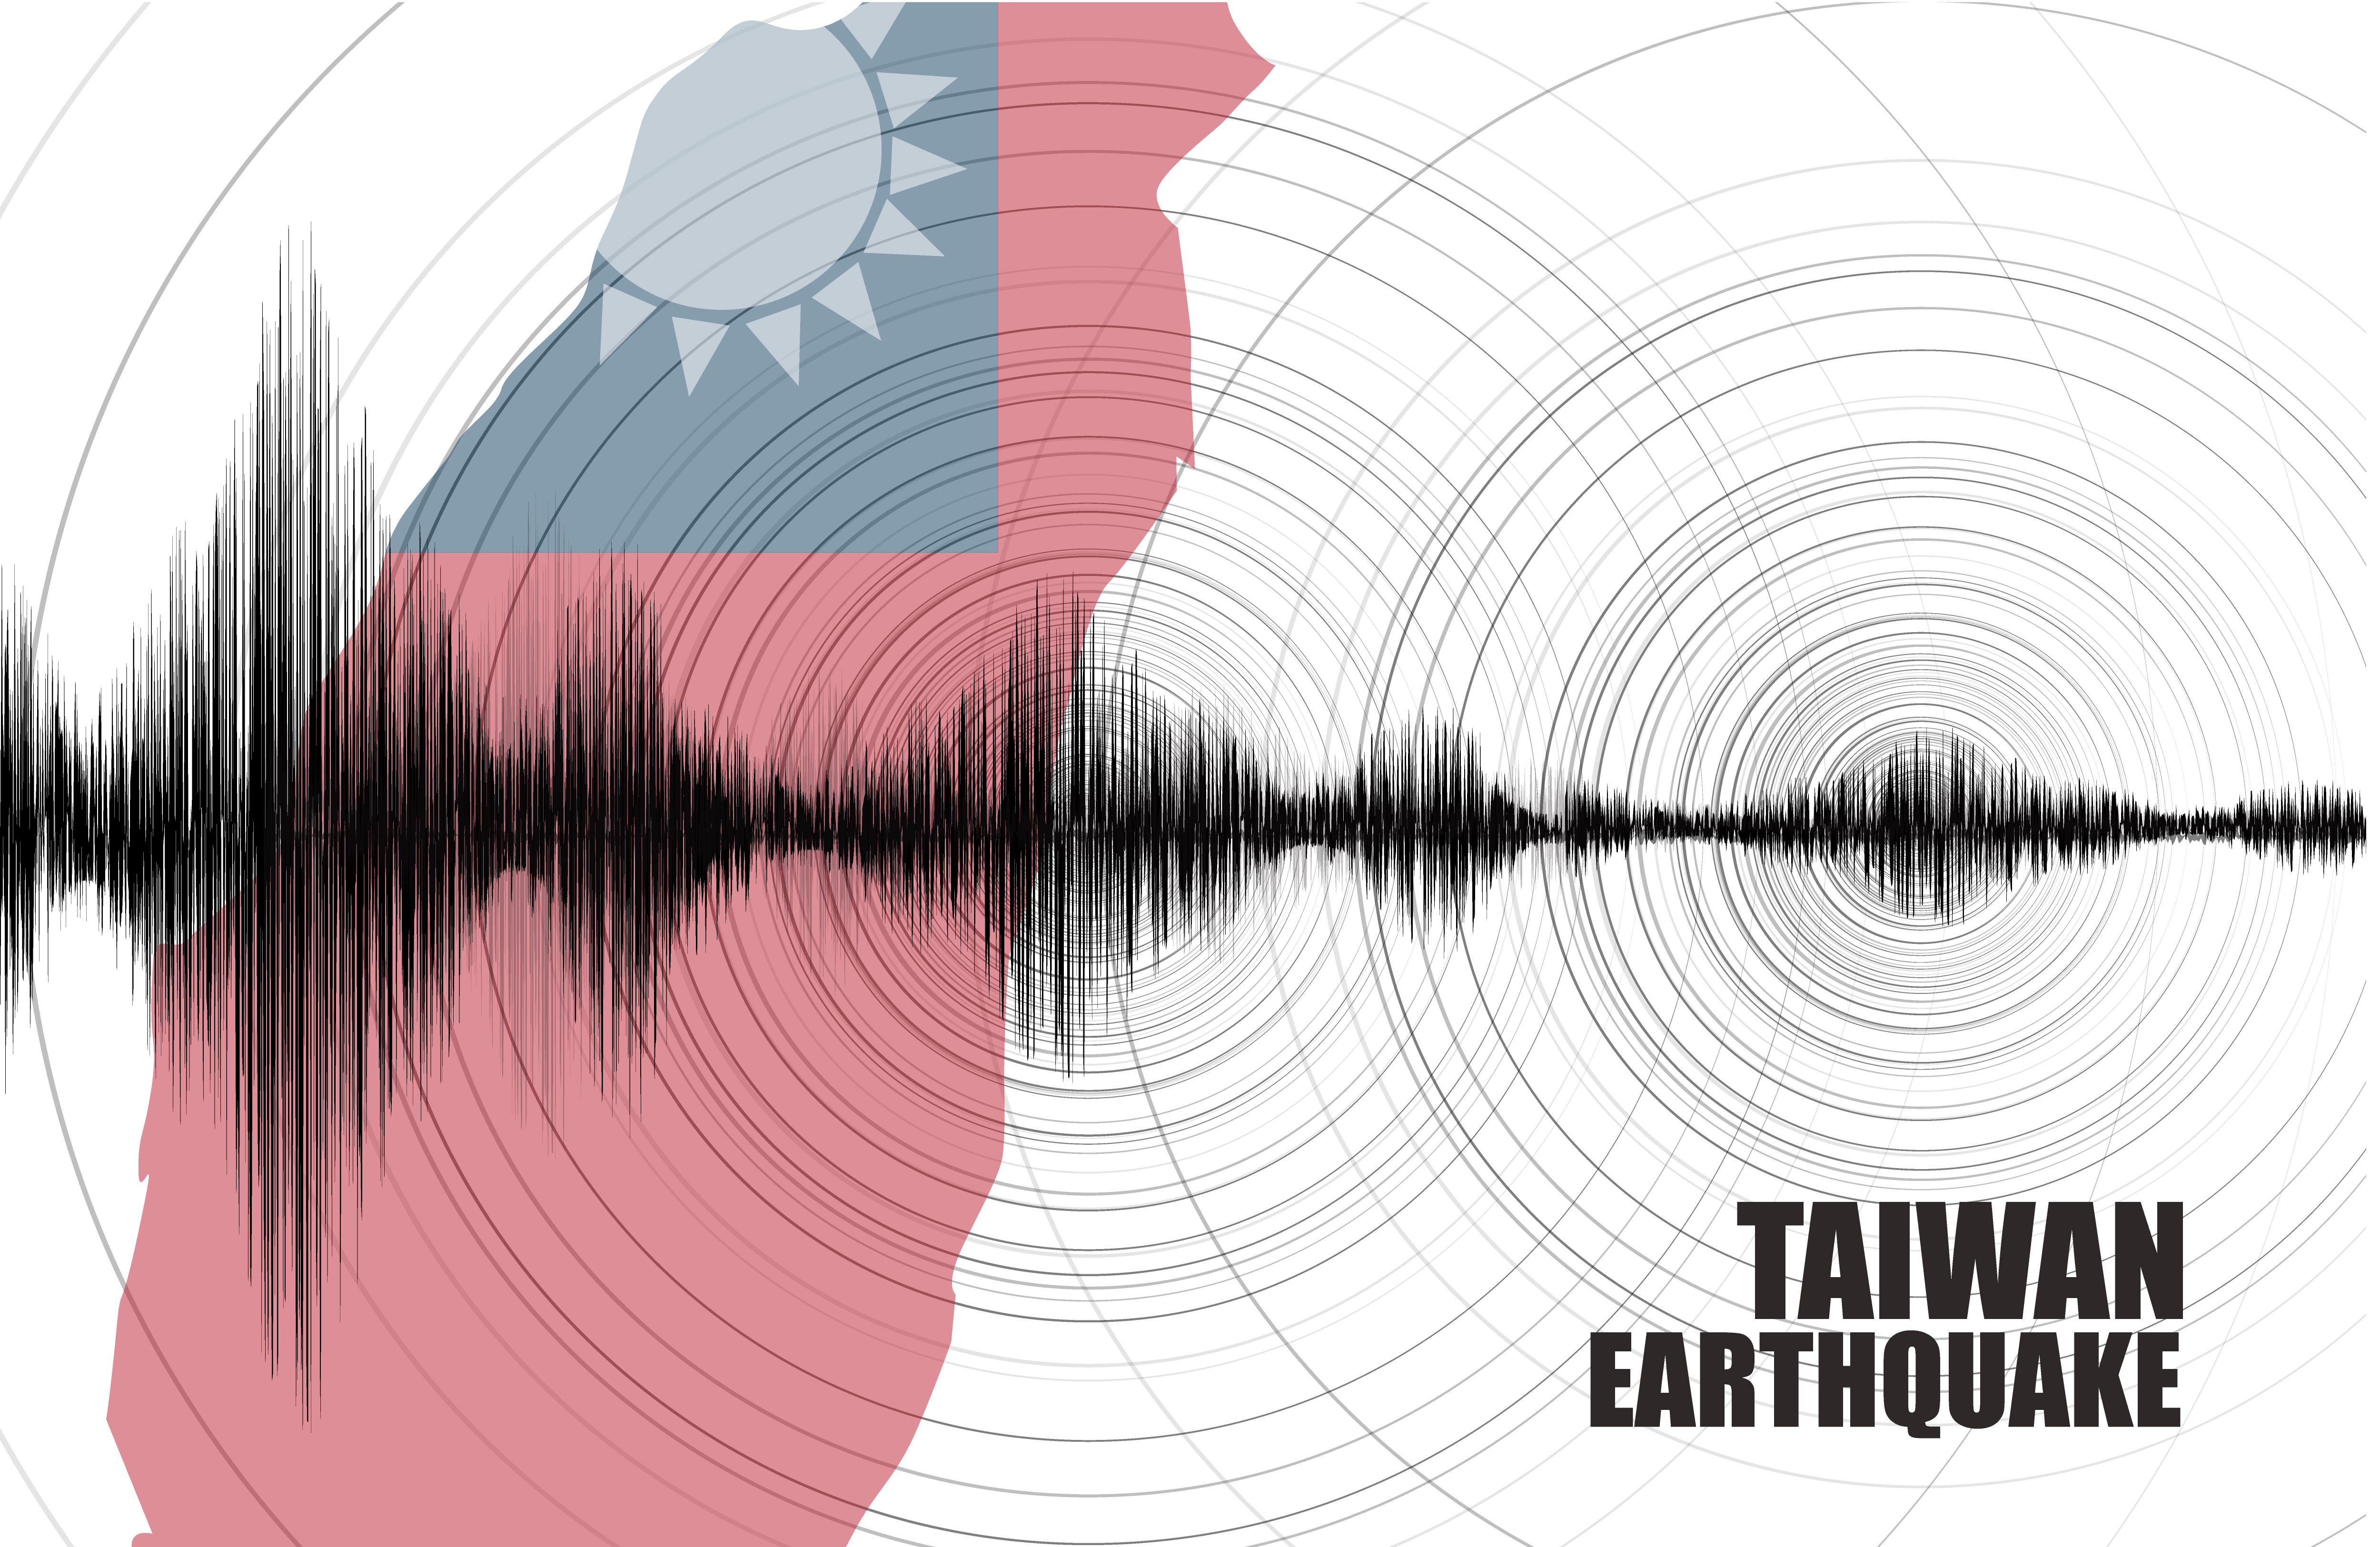 DEVELOPING: Powerful 7.3 earthquake near Taiwan triggers tsunami warning for Okinawa